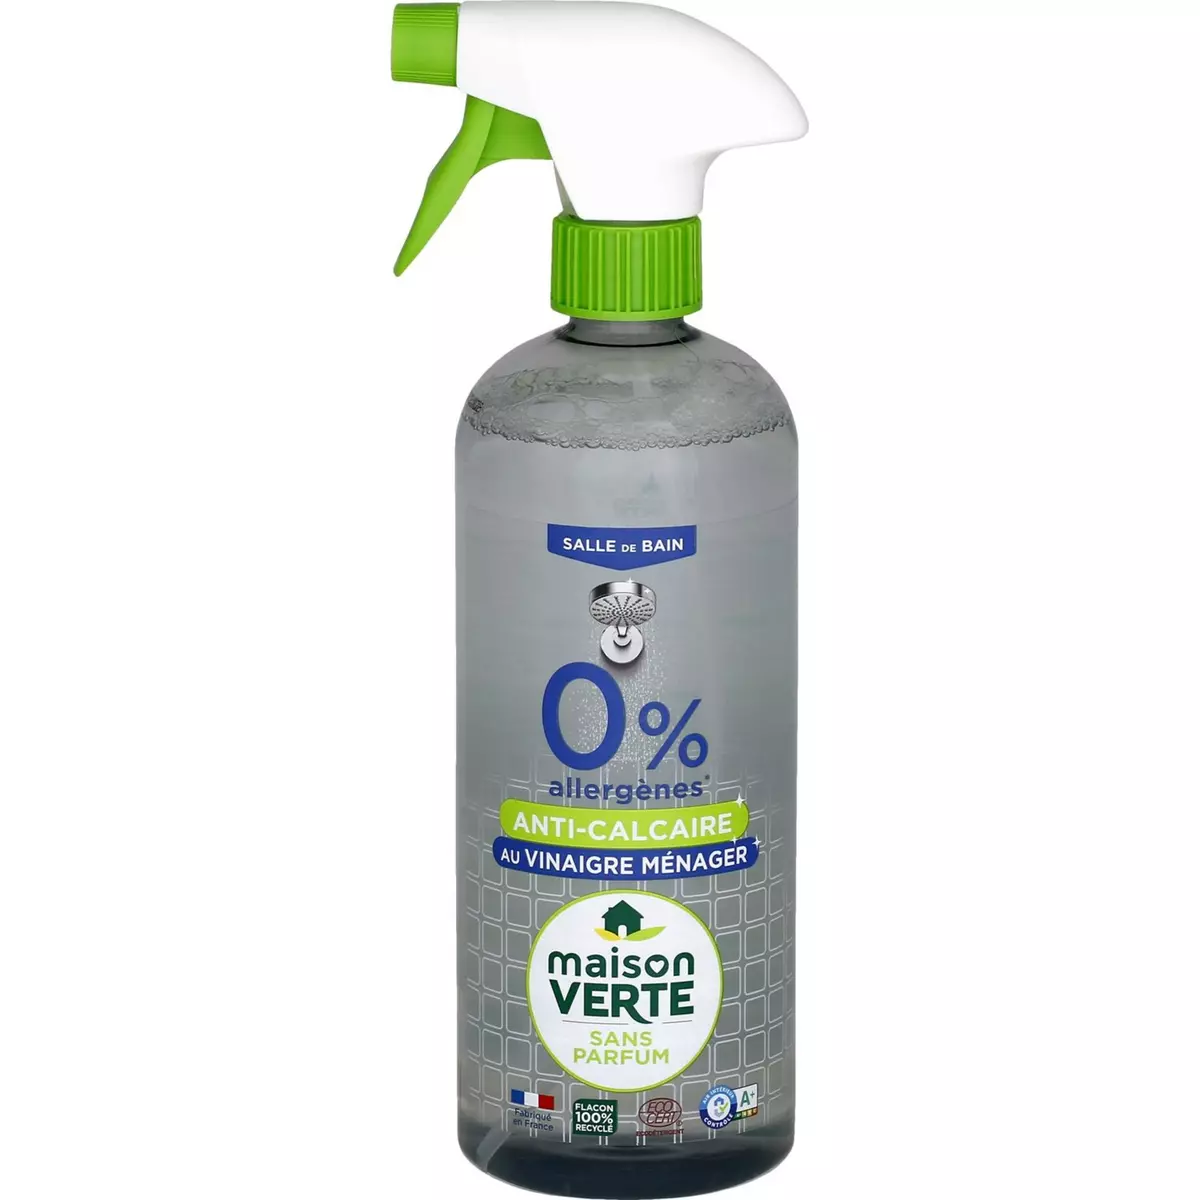 MAISON VERTE Spray anti-calcaire au vinaigre 0% allergènes 750ml